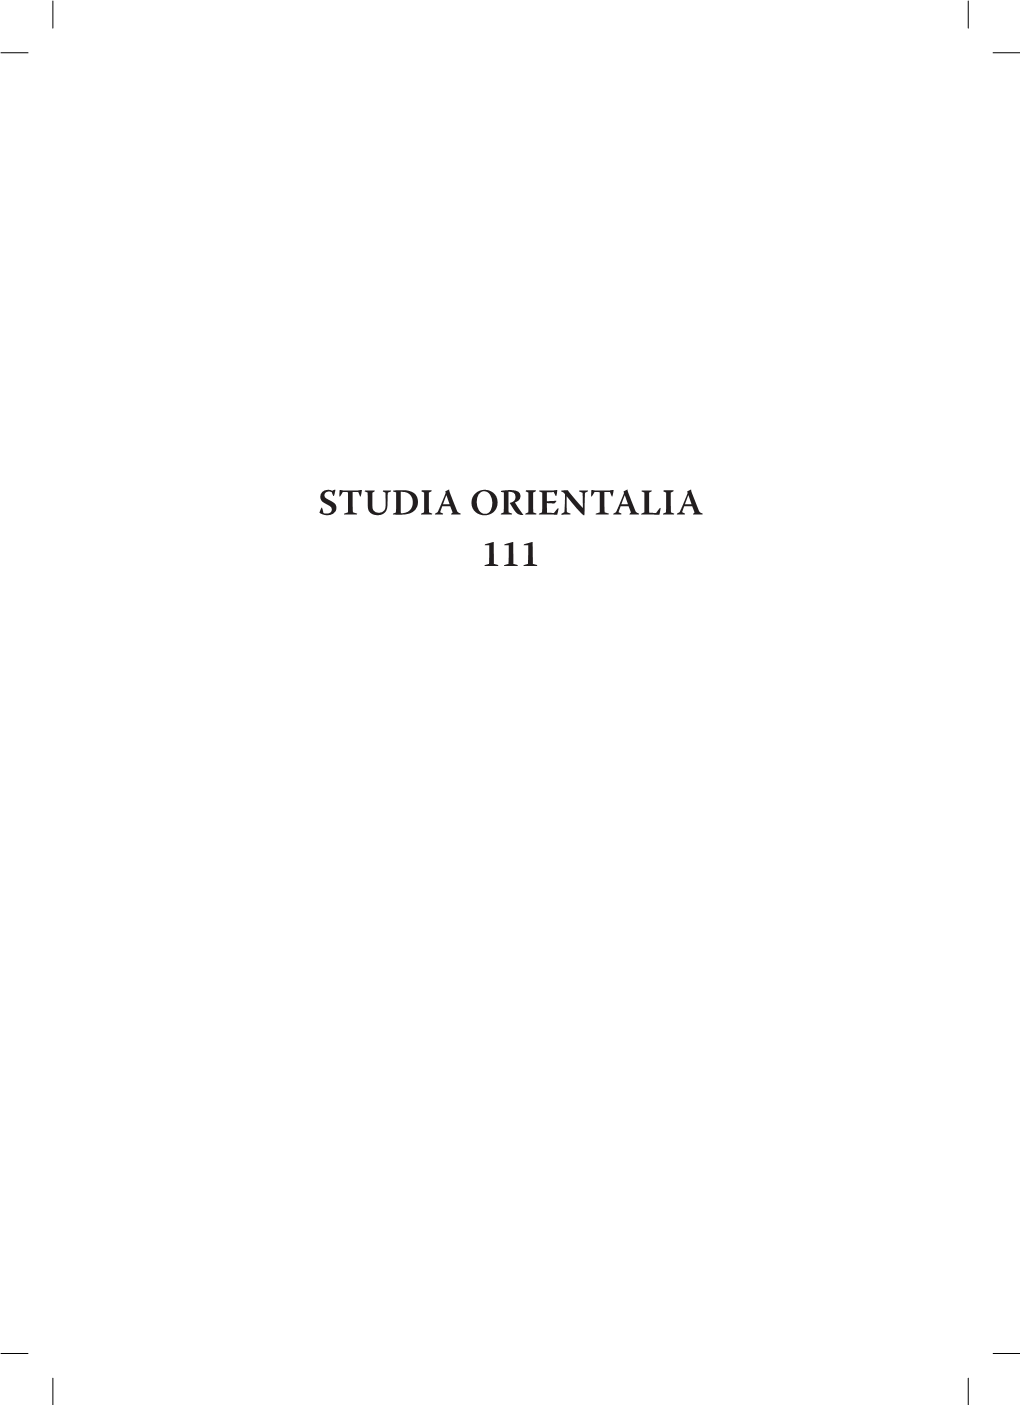 Studia Orientalia 111 Studia Orientalia Volume 111 Published by the Finnish Oriental Society Studia Orientalia Volume 111 Published by the Finnish Oriental Society